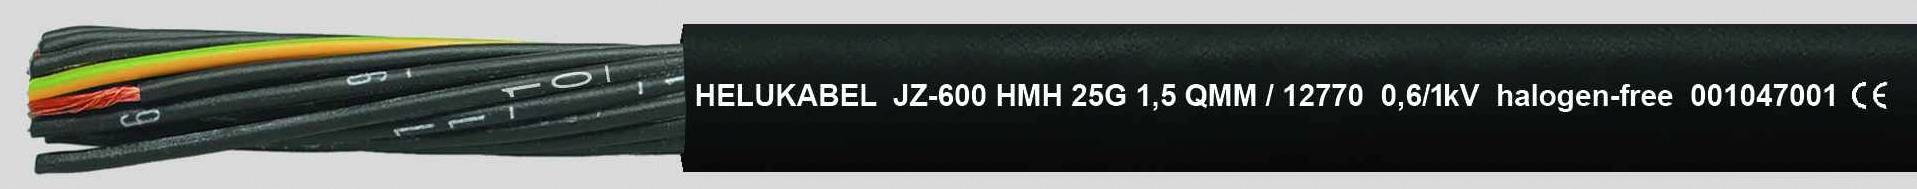 HELUKABEL JZ-500 HMH Steuerleitung 2 x 1.50 mm² Schwarz 12759-500 500 m